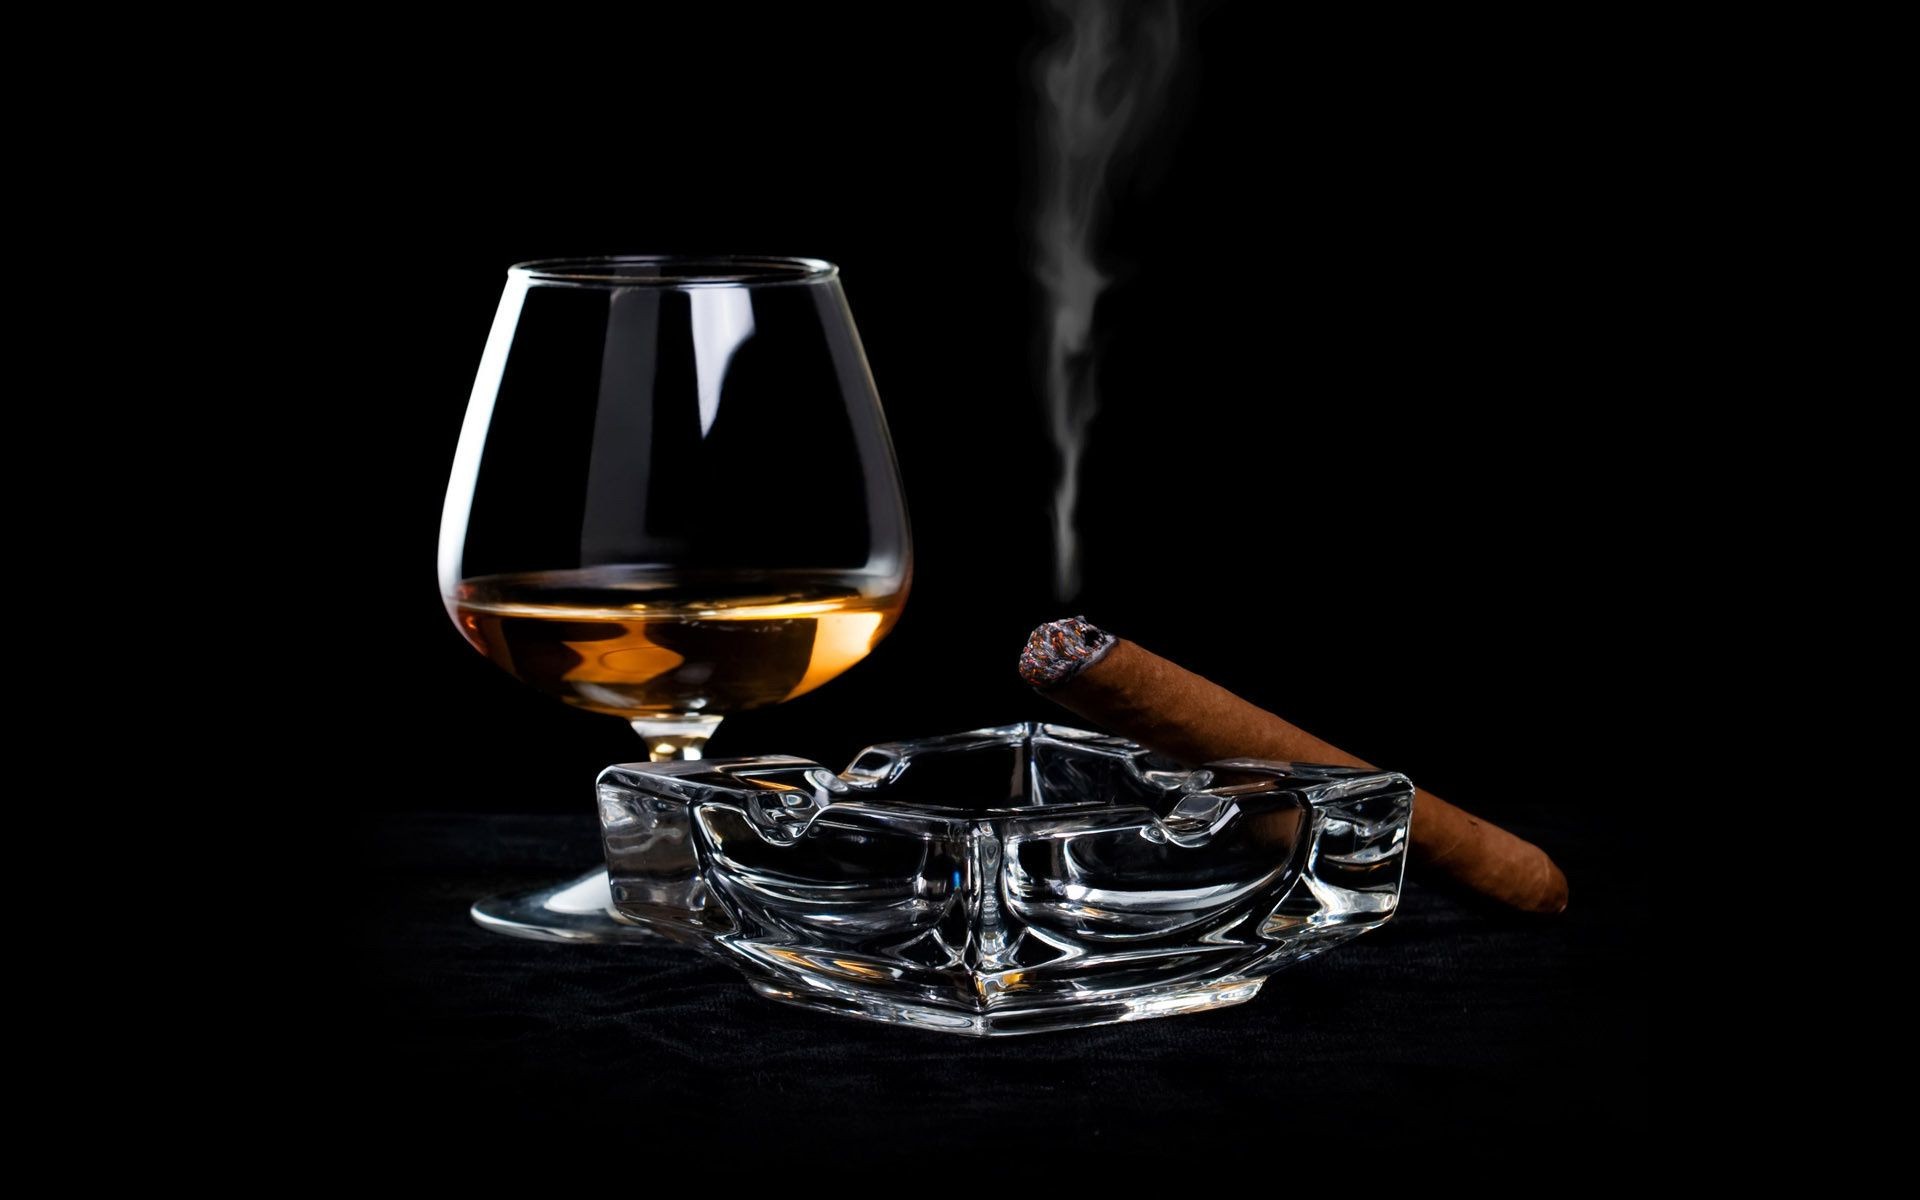 drinks drink glass wine whisky cognac alcohol liquor liquid desktop scotch bottle bar dark intoxicated amber bourbon addiction hot